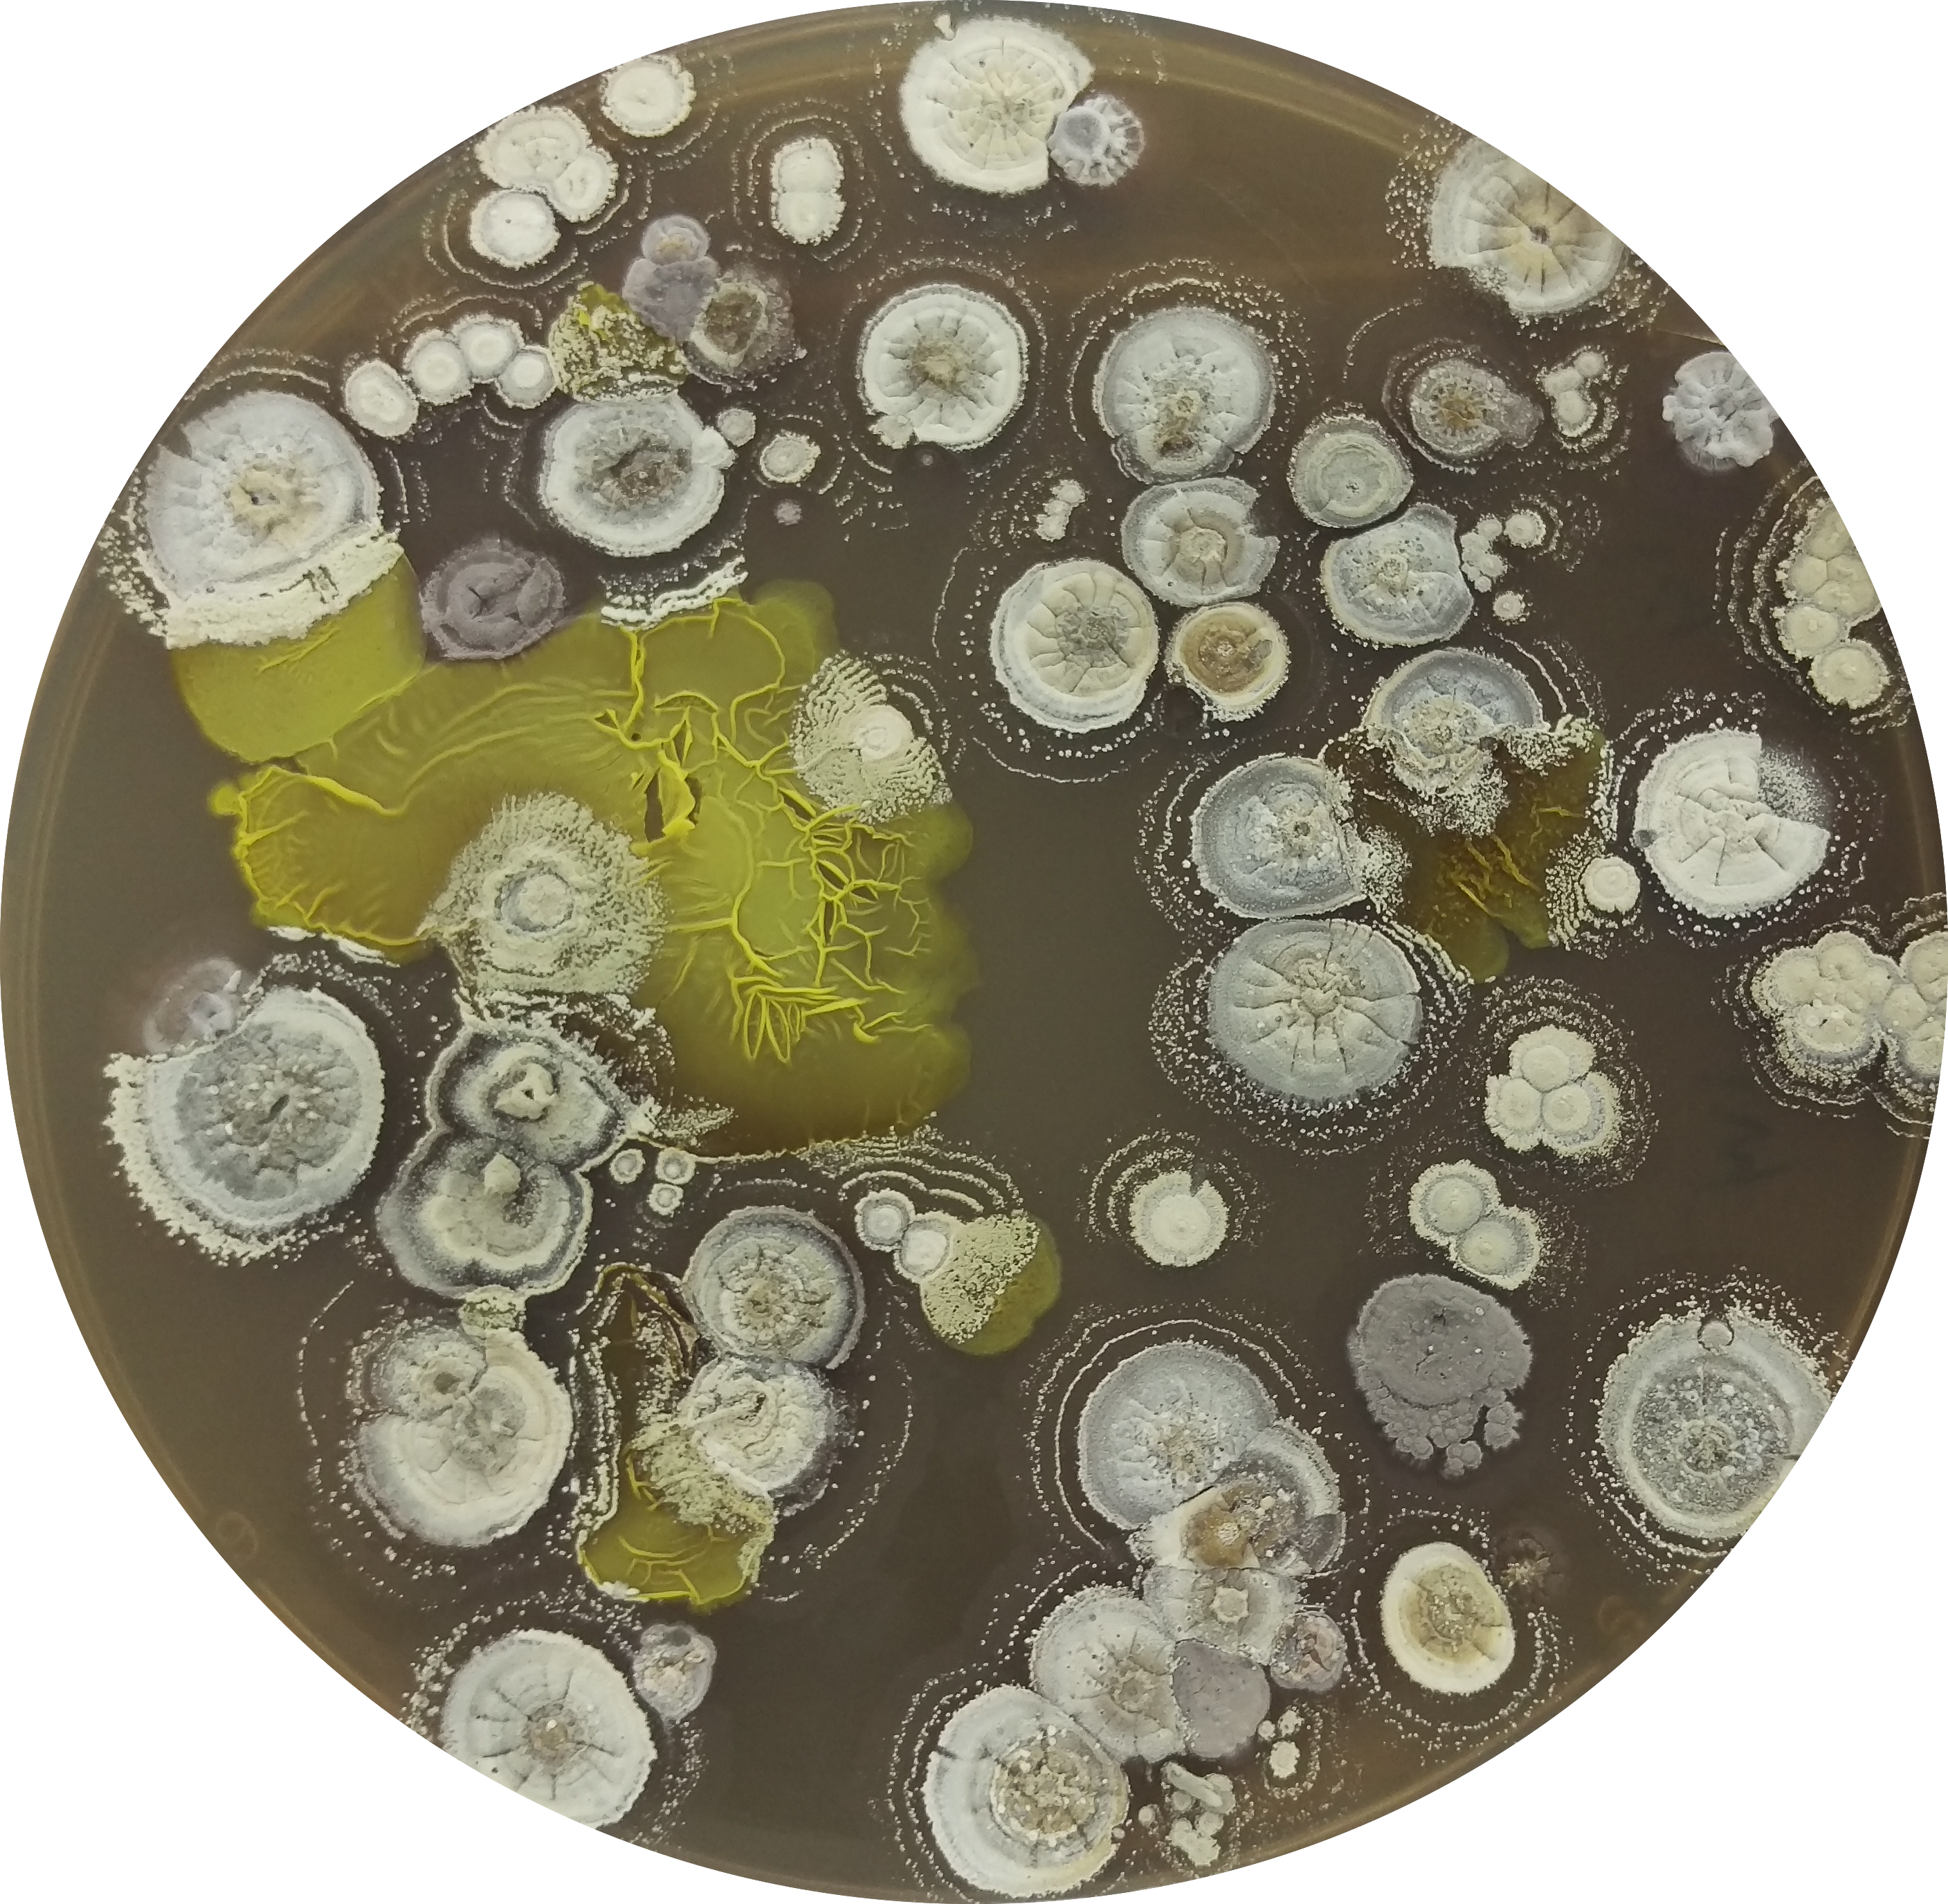 Microbes on petri dish